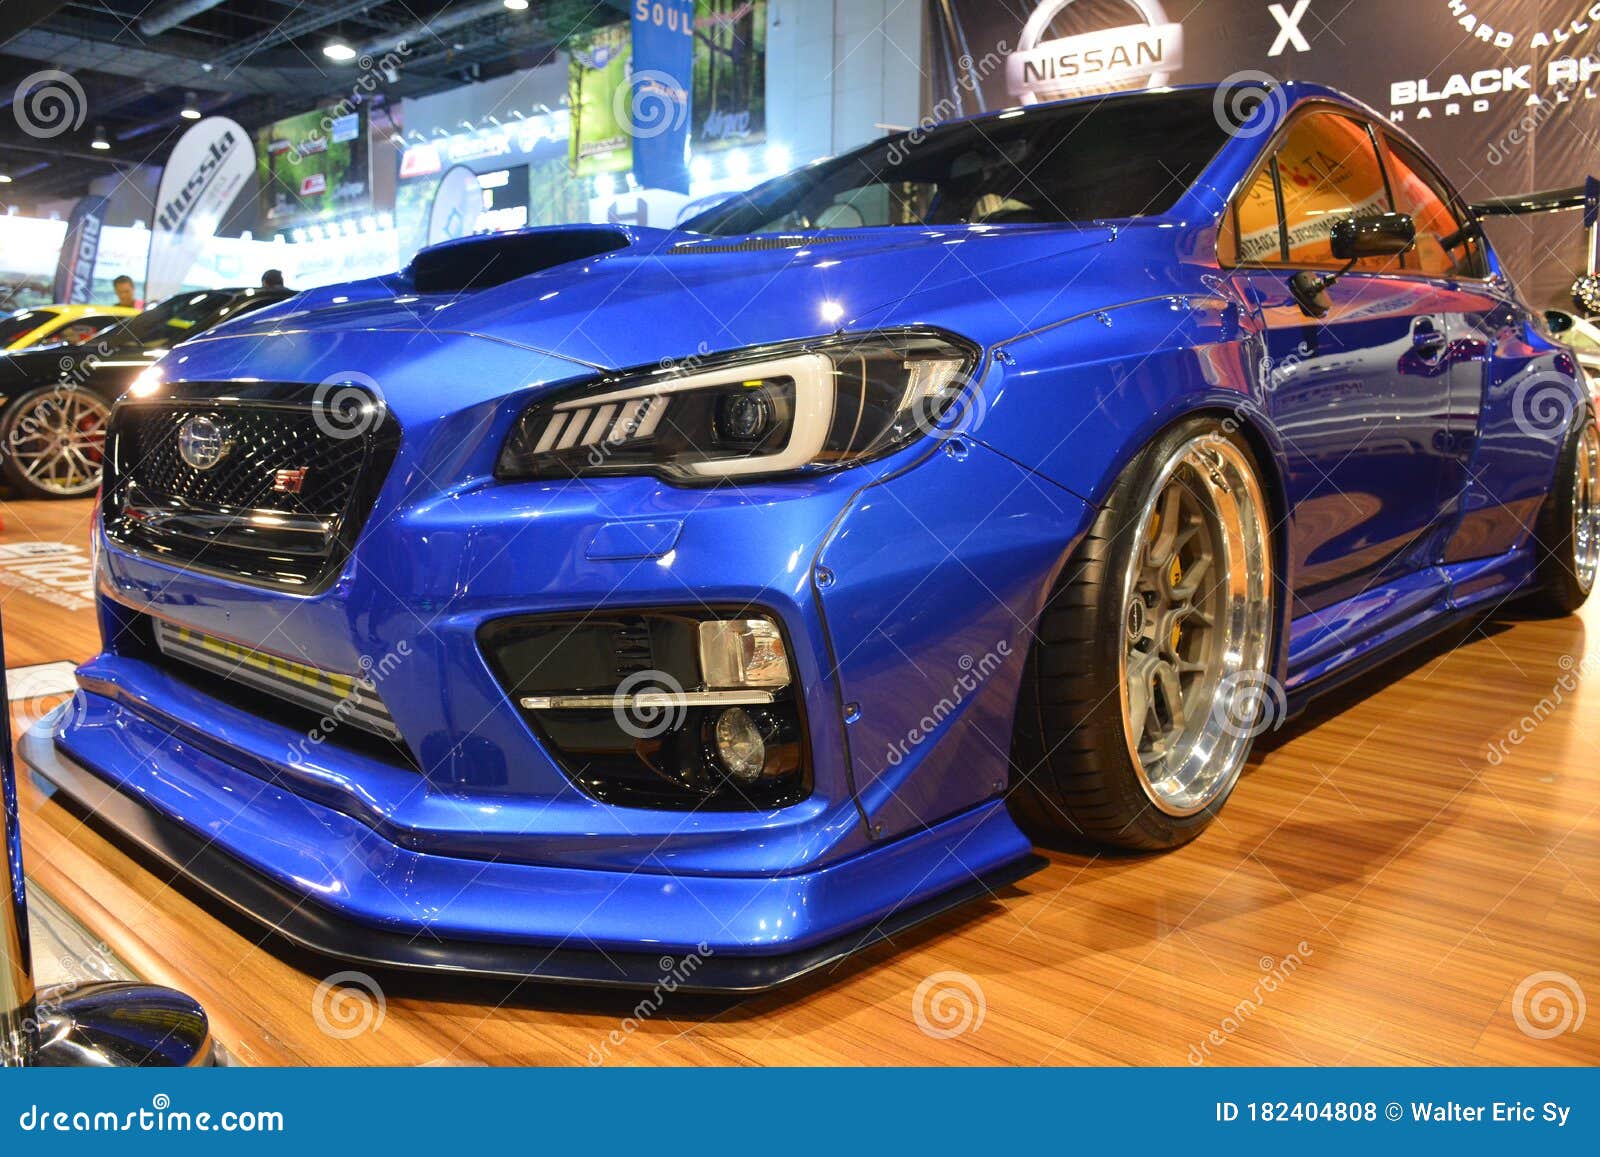 Subaru Impreza Sti At Manila Auto Salon Car Show In Pasay